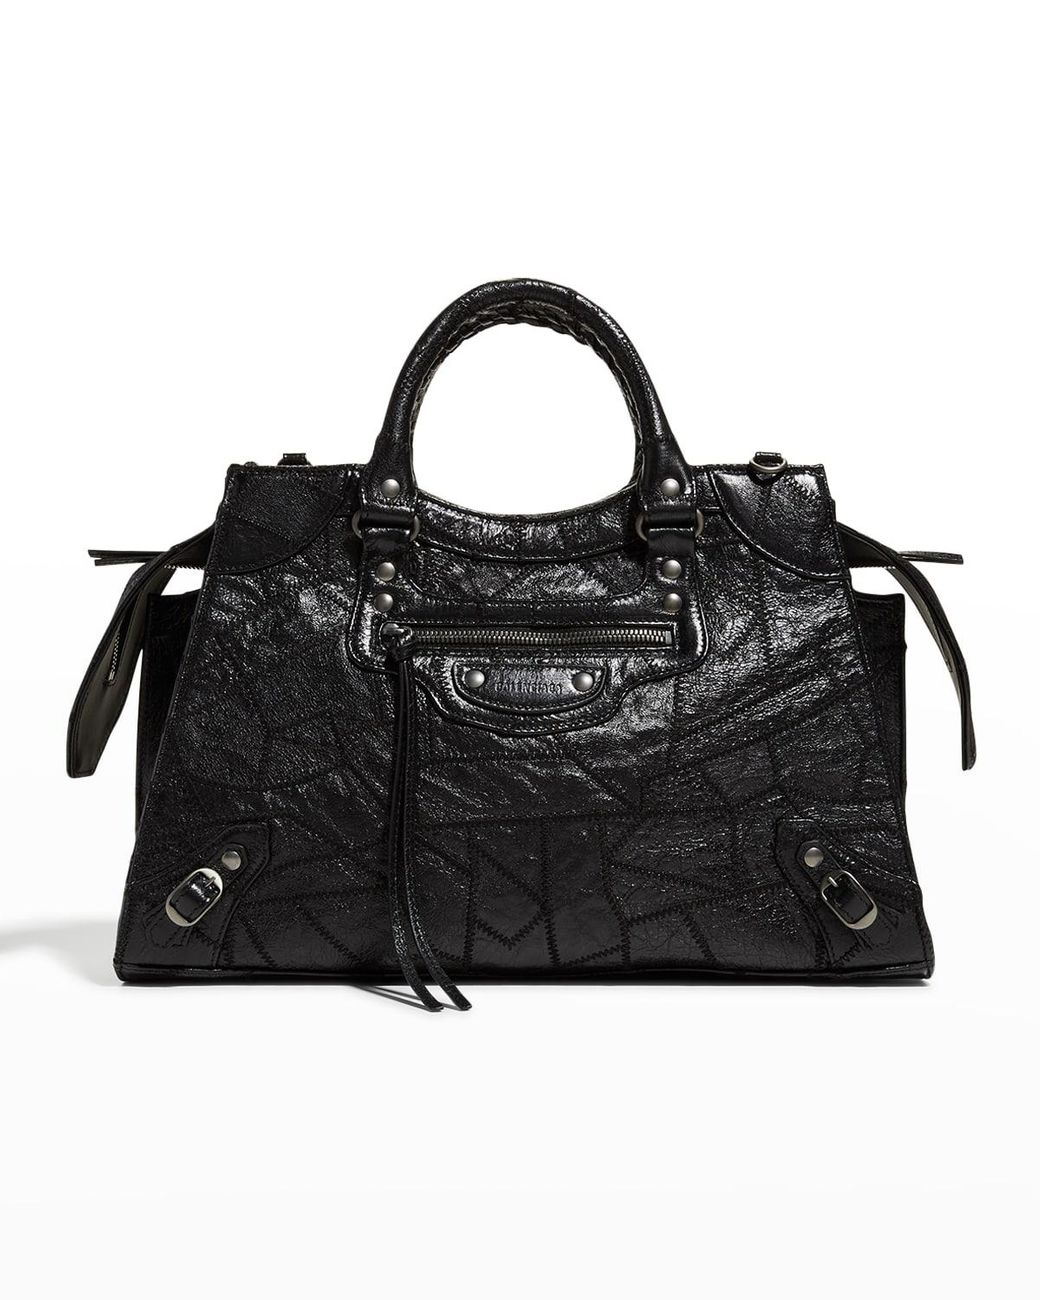 Belønning Annoncør Gulerod Balenciaga Neo Classic City Patchwork Satchel Bag in Black | Lyst